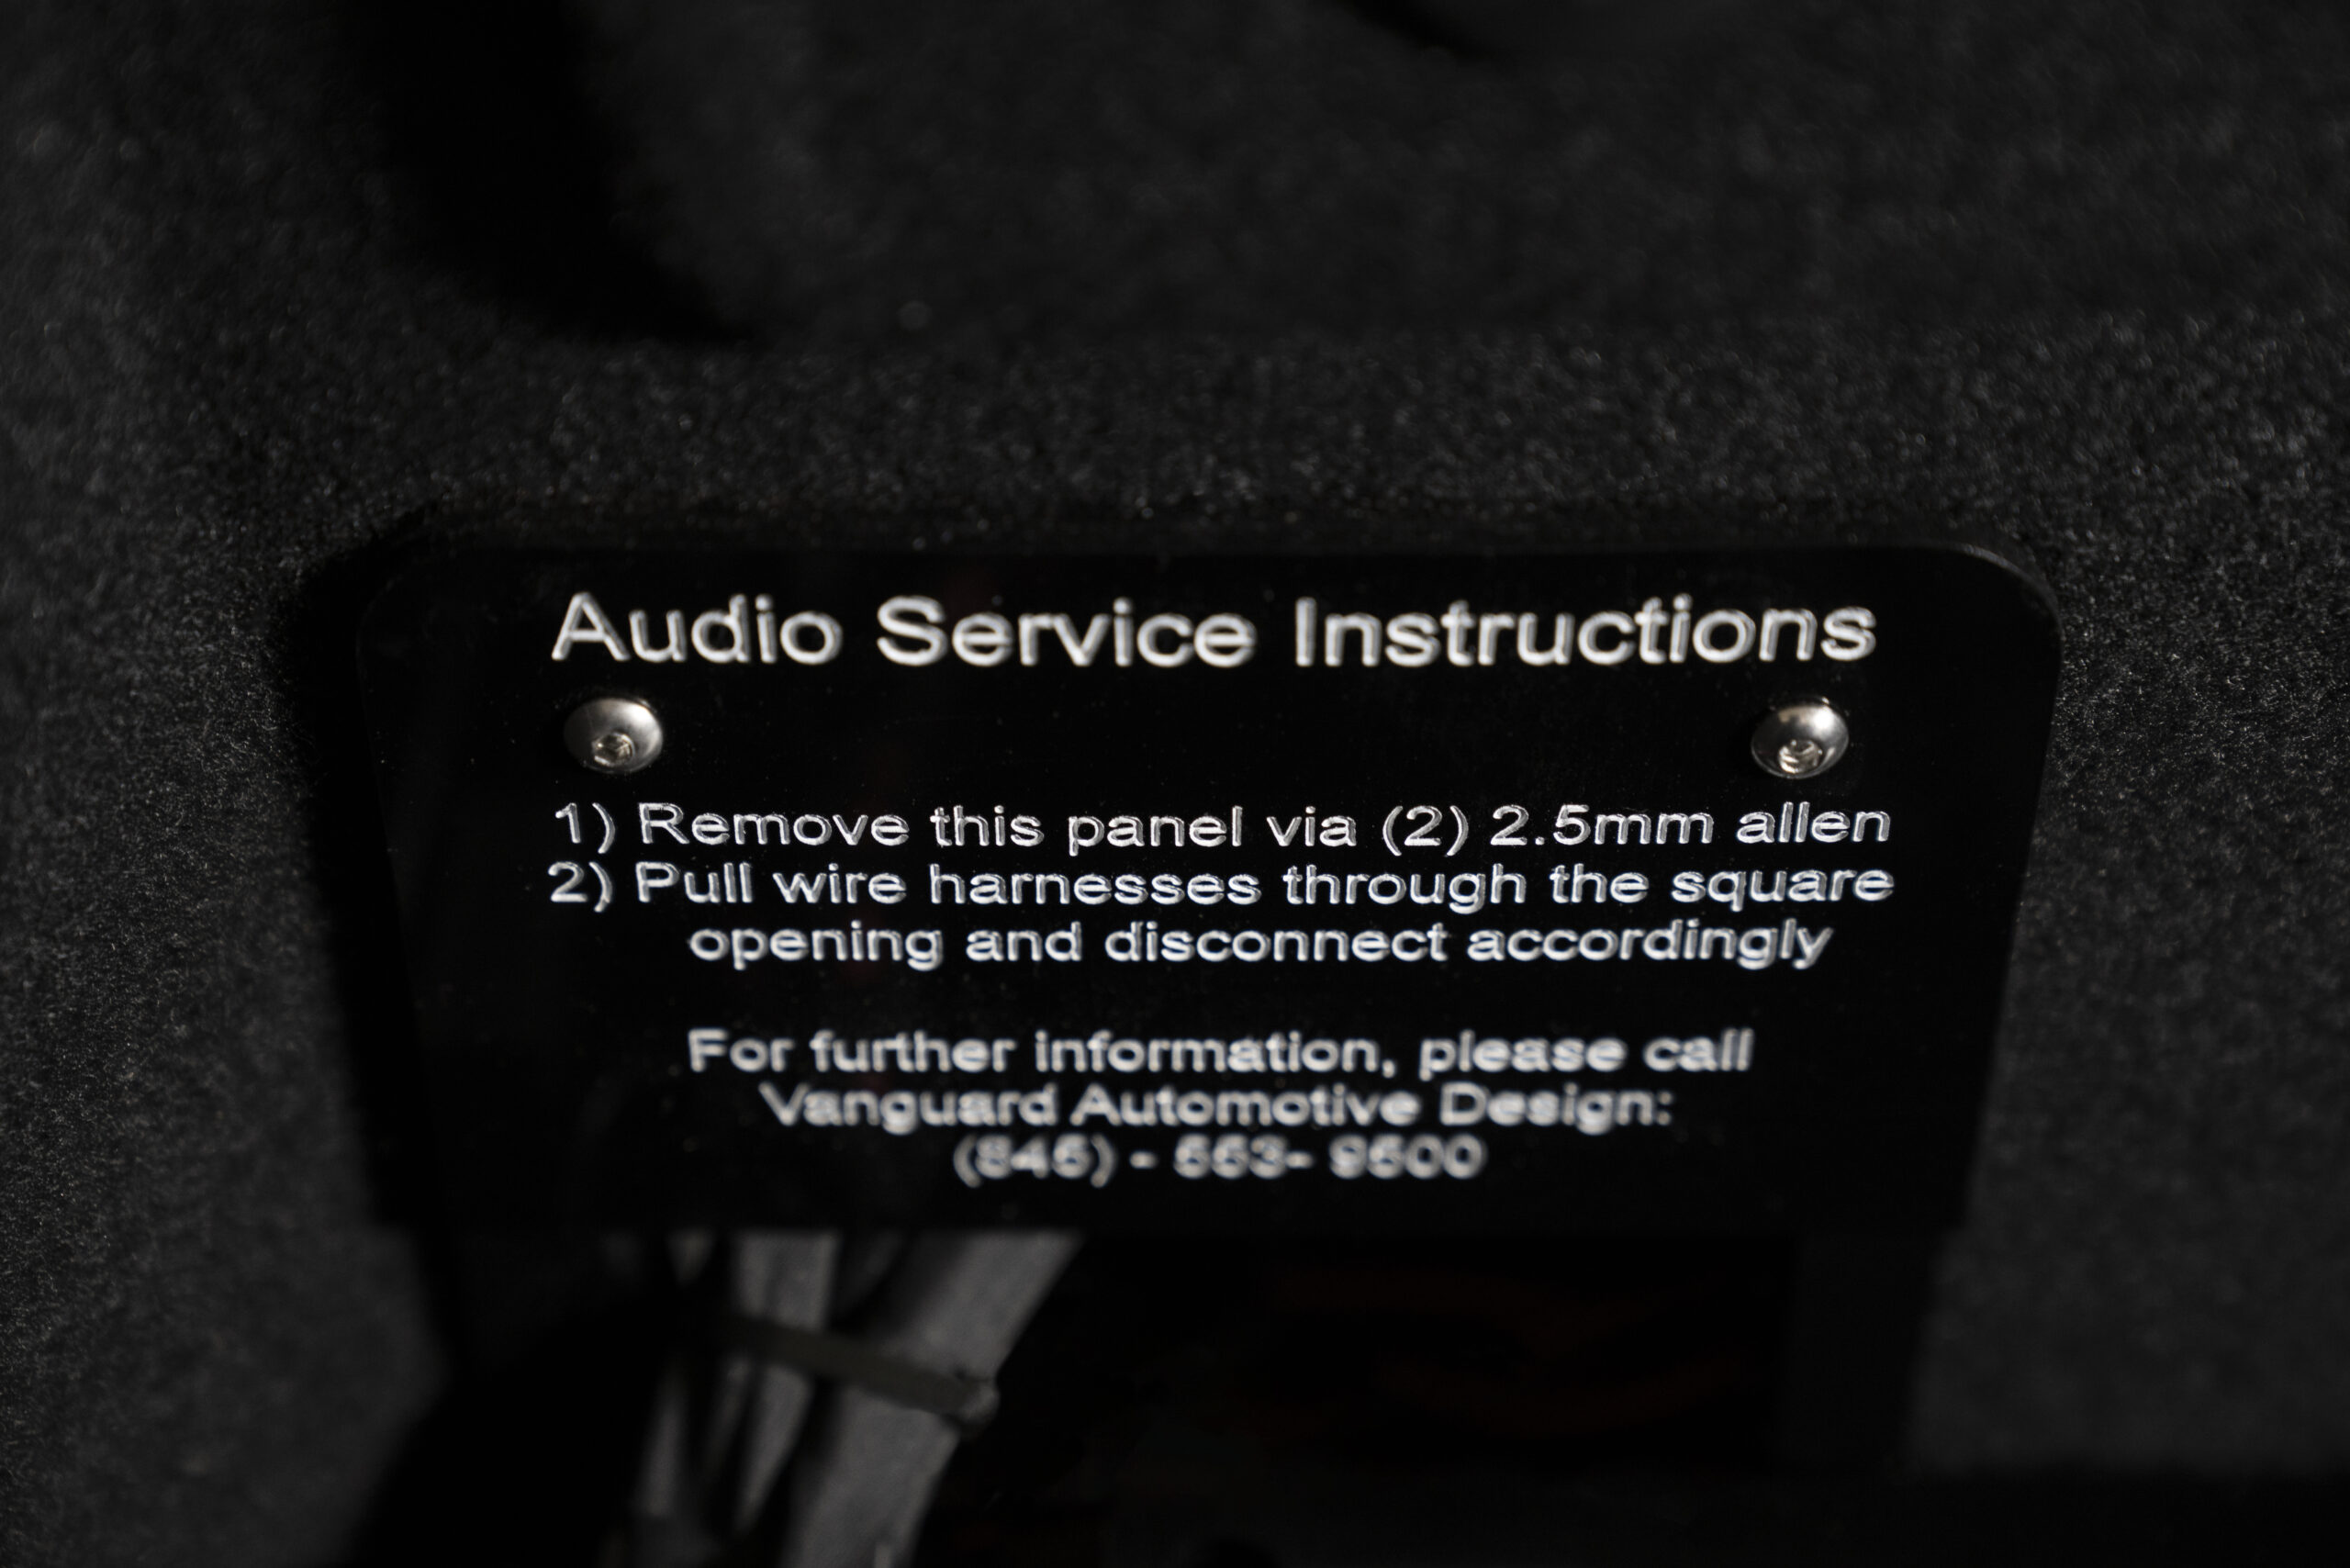 Lamborghini Huracan Evo Sound System Subwoofer Speaker Amplifier Upgrade Radar Detector Laser Jammer Radenso Escort Ci ALP Detail Ceramic Coat PPF Paint Protection Film Expel 60